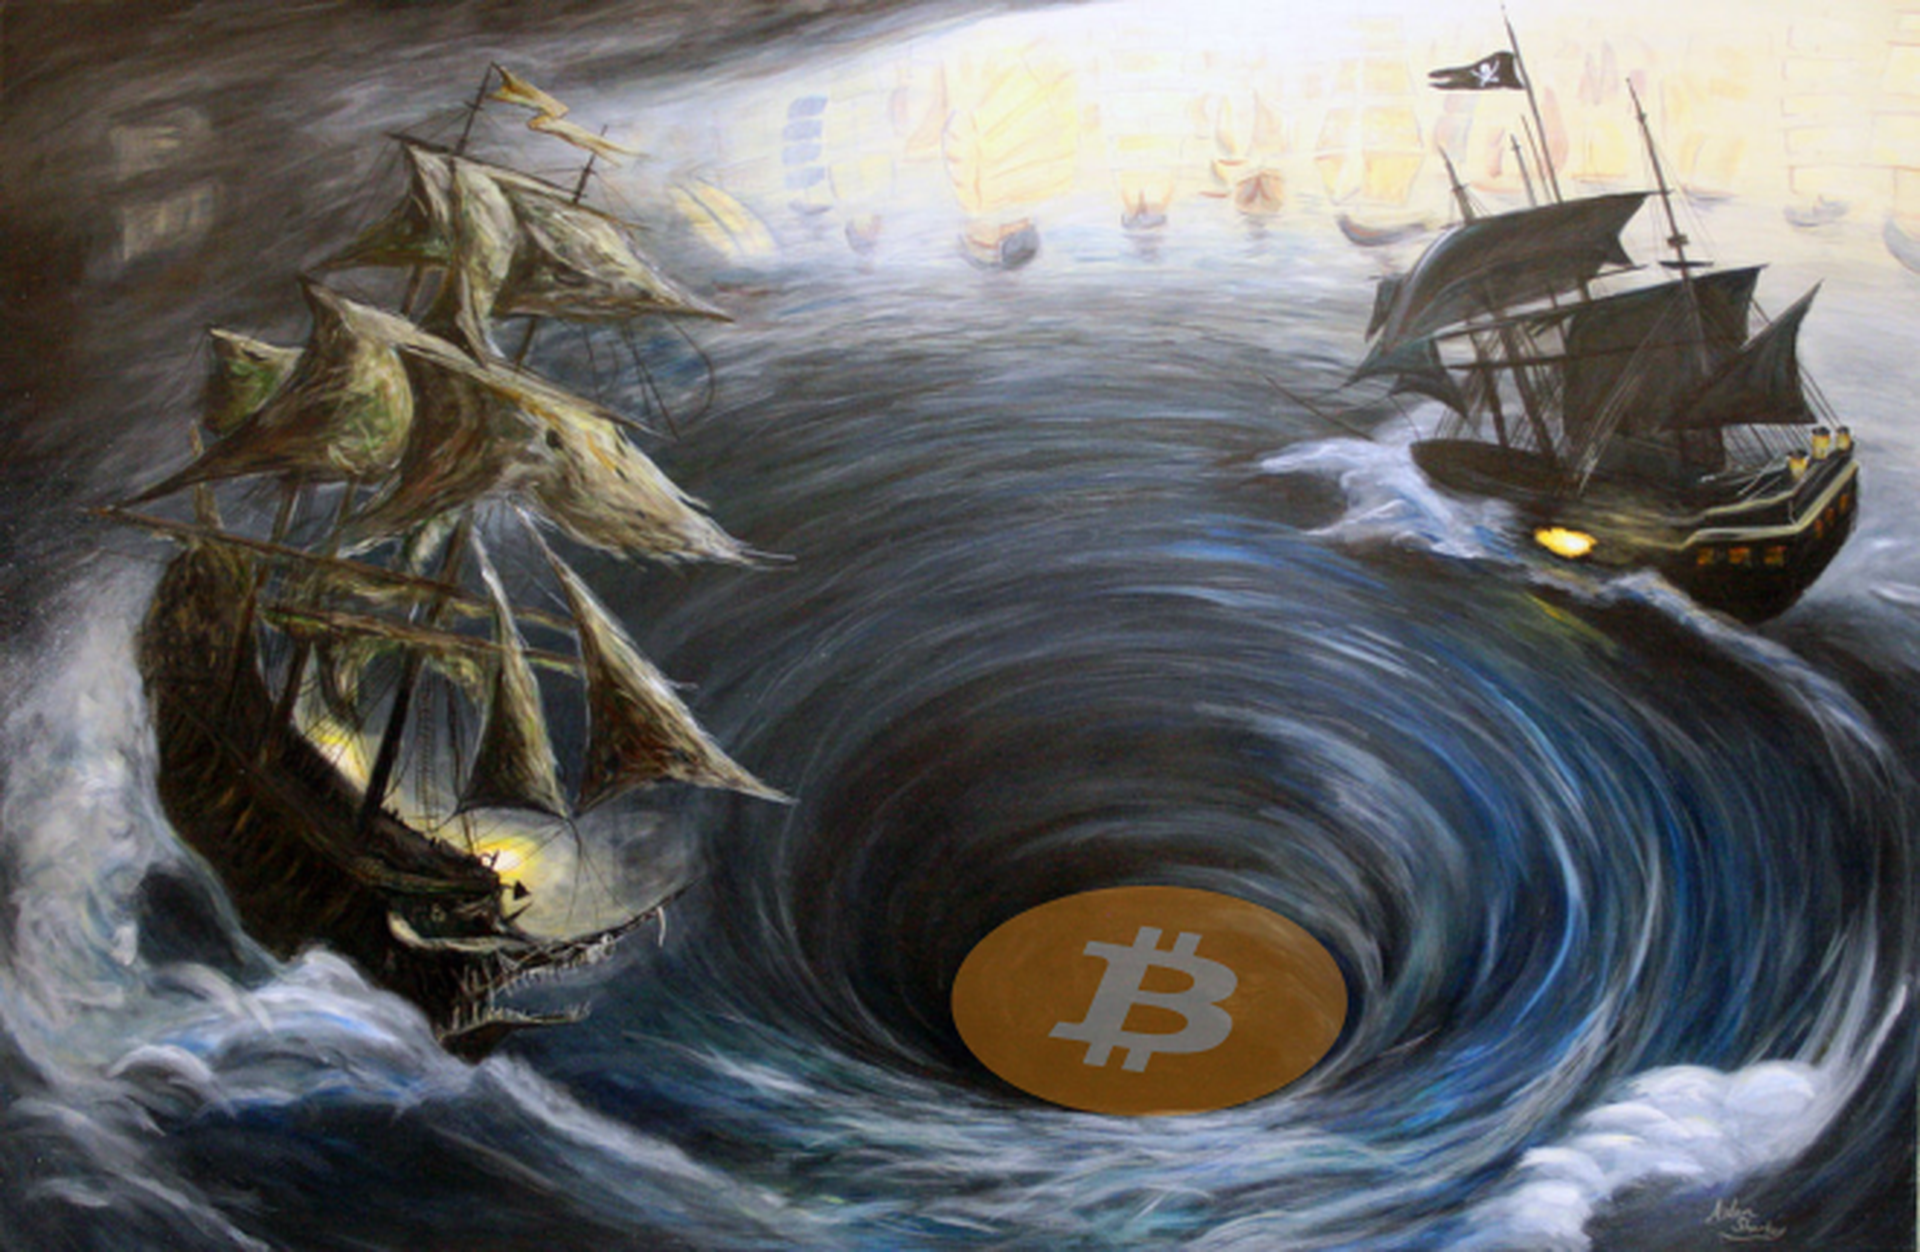 The Bitcoin Journey